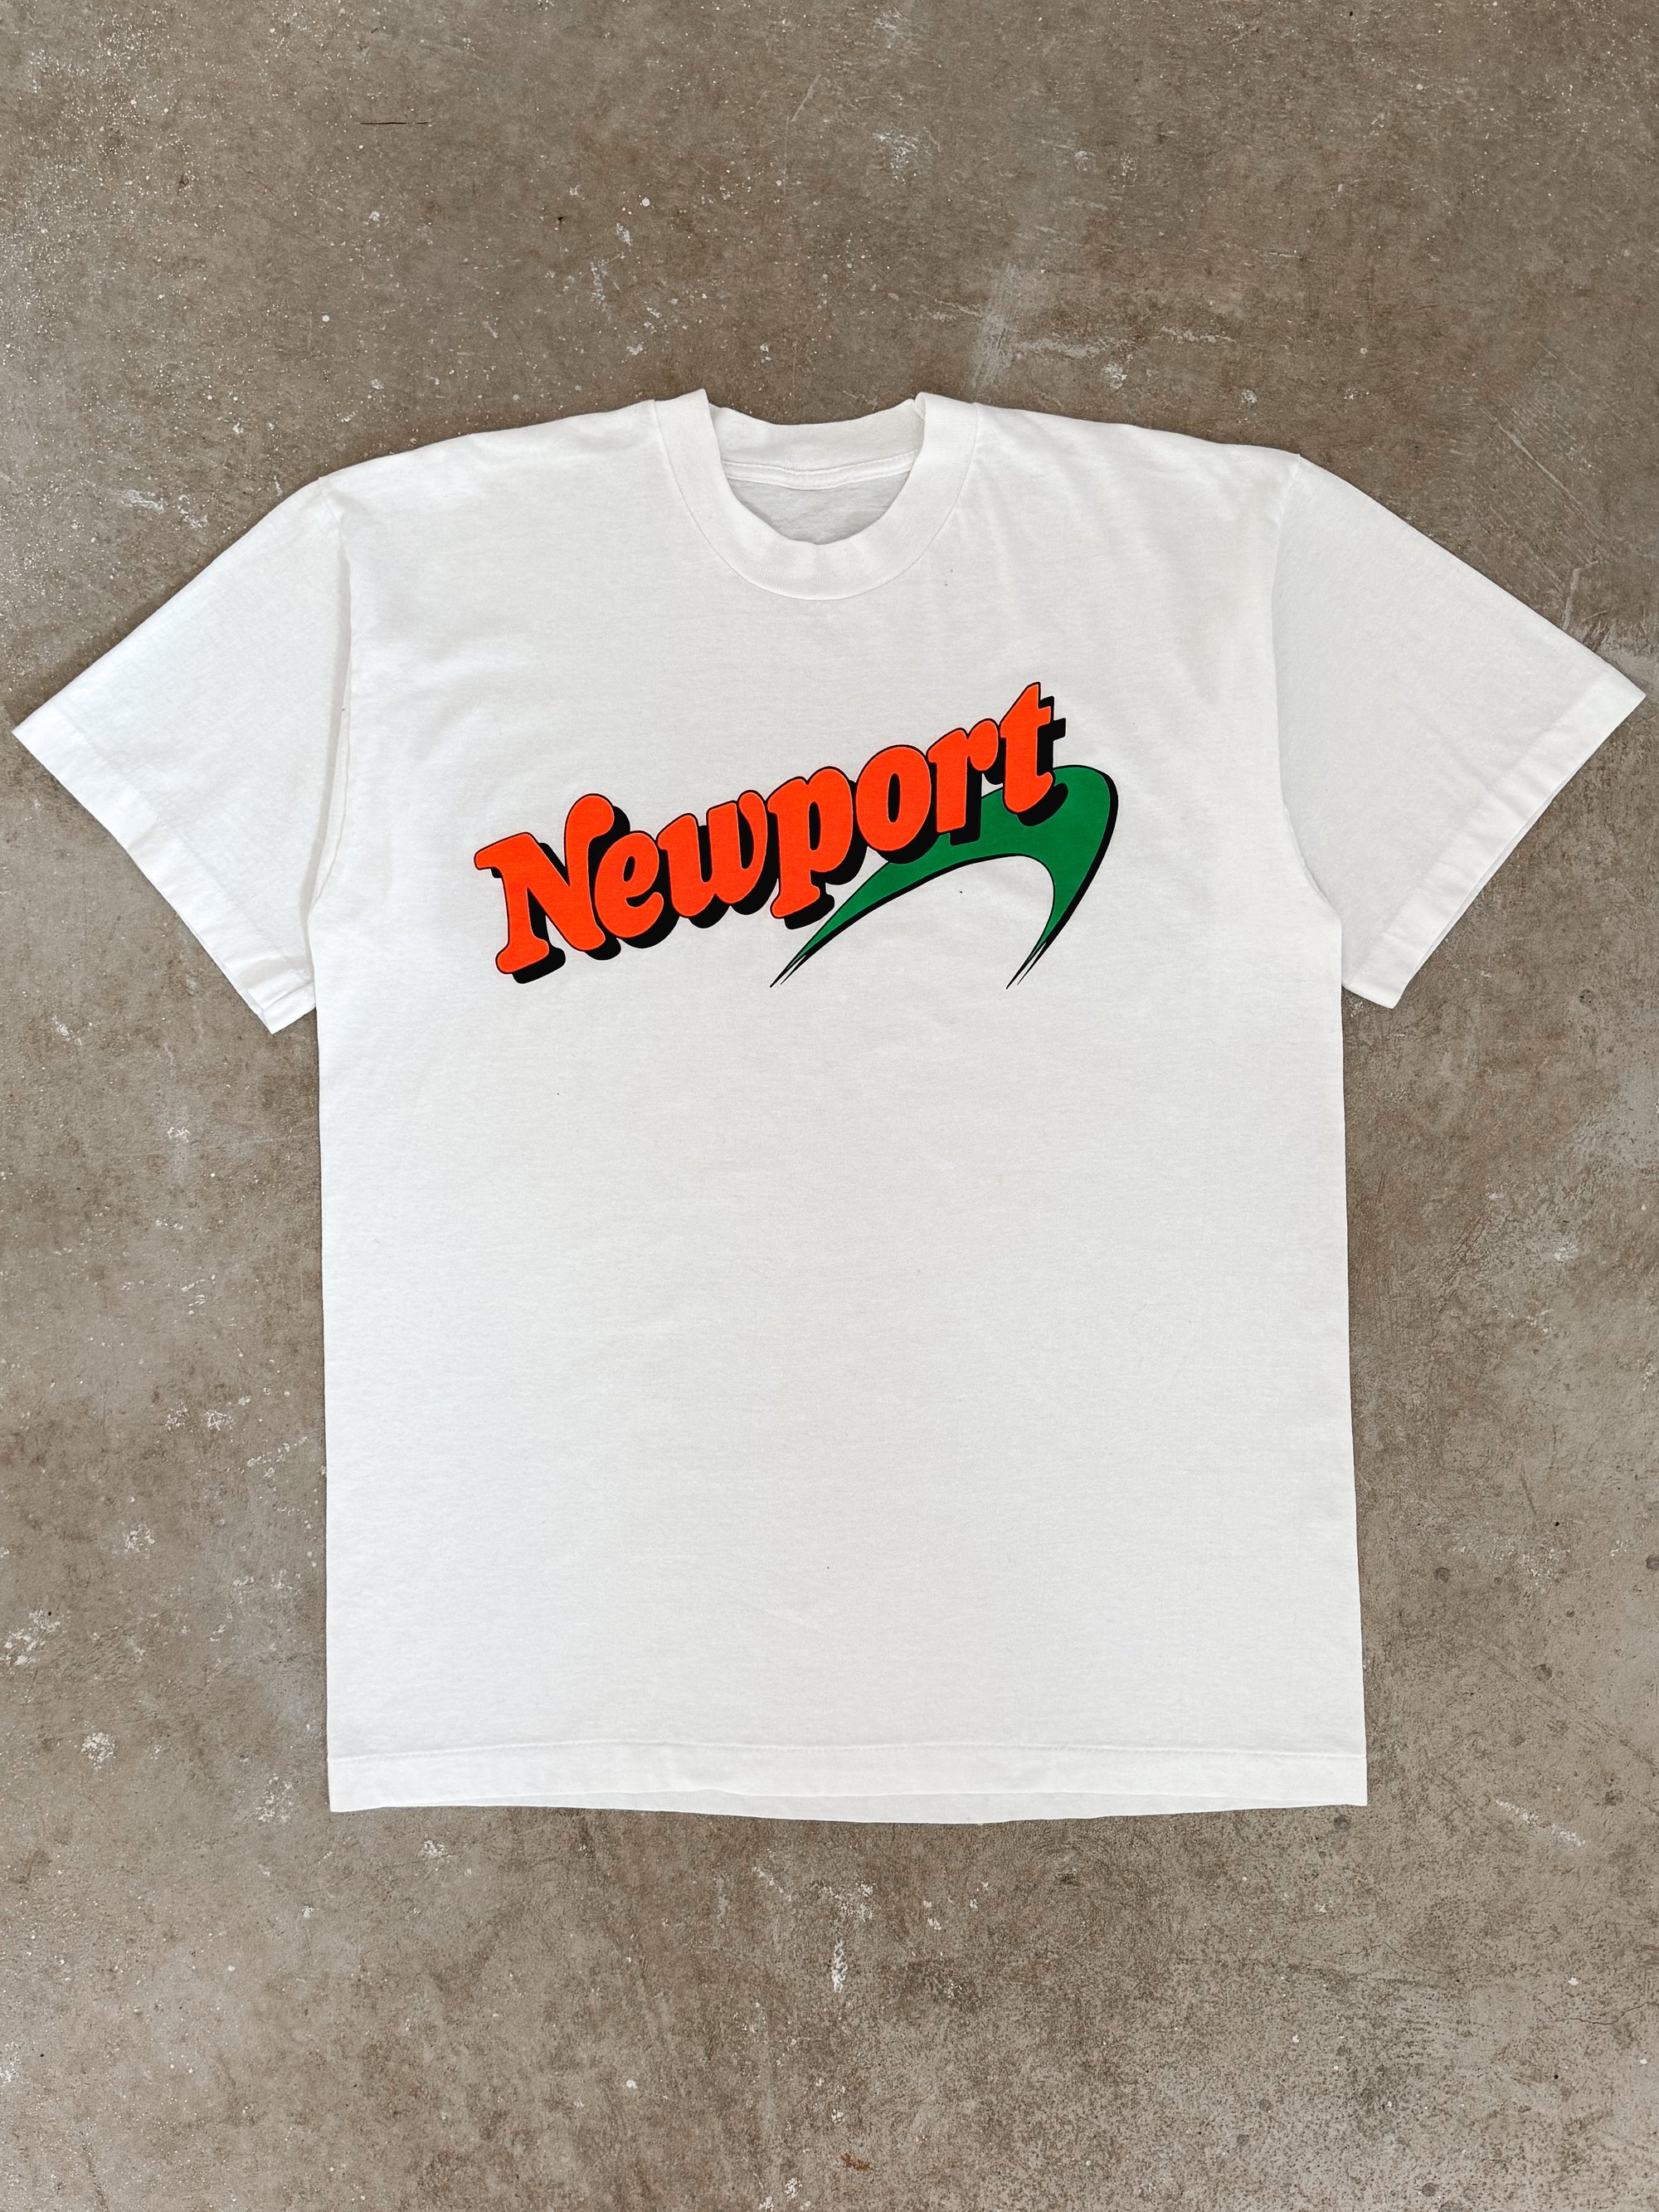 1990s "Newport" Tee (L)